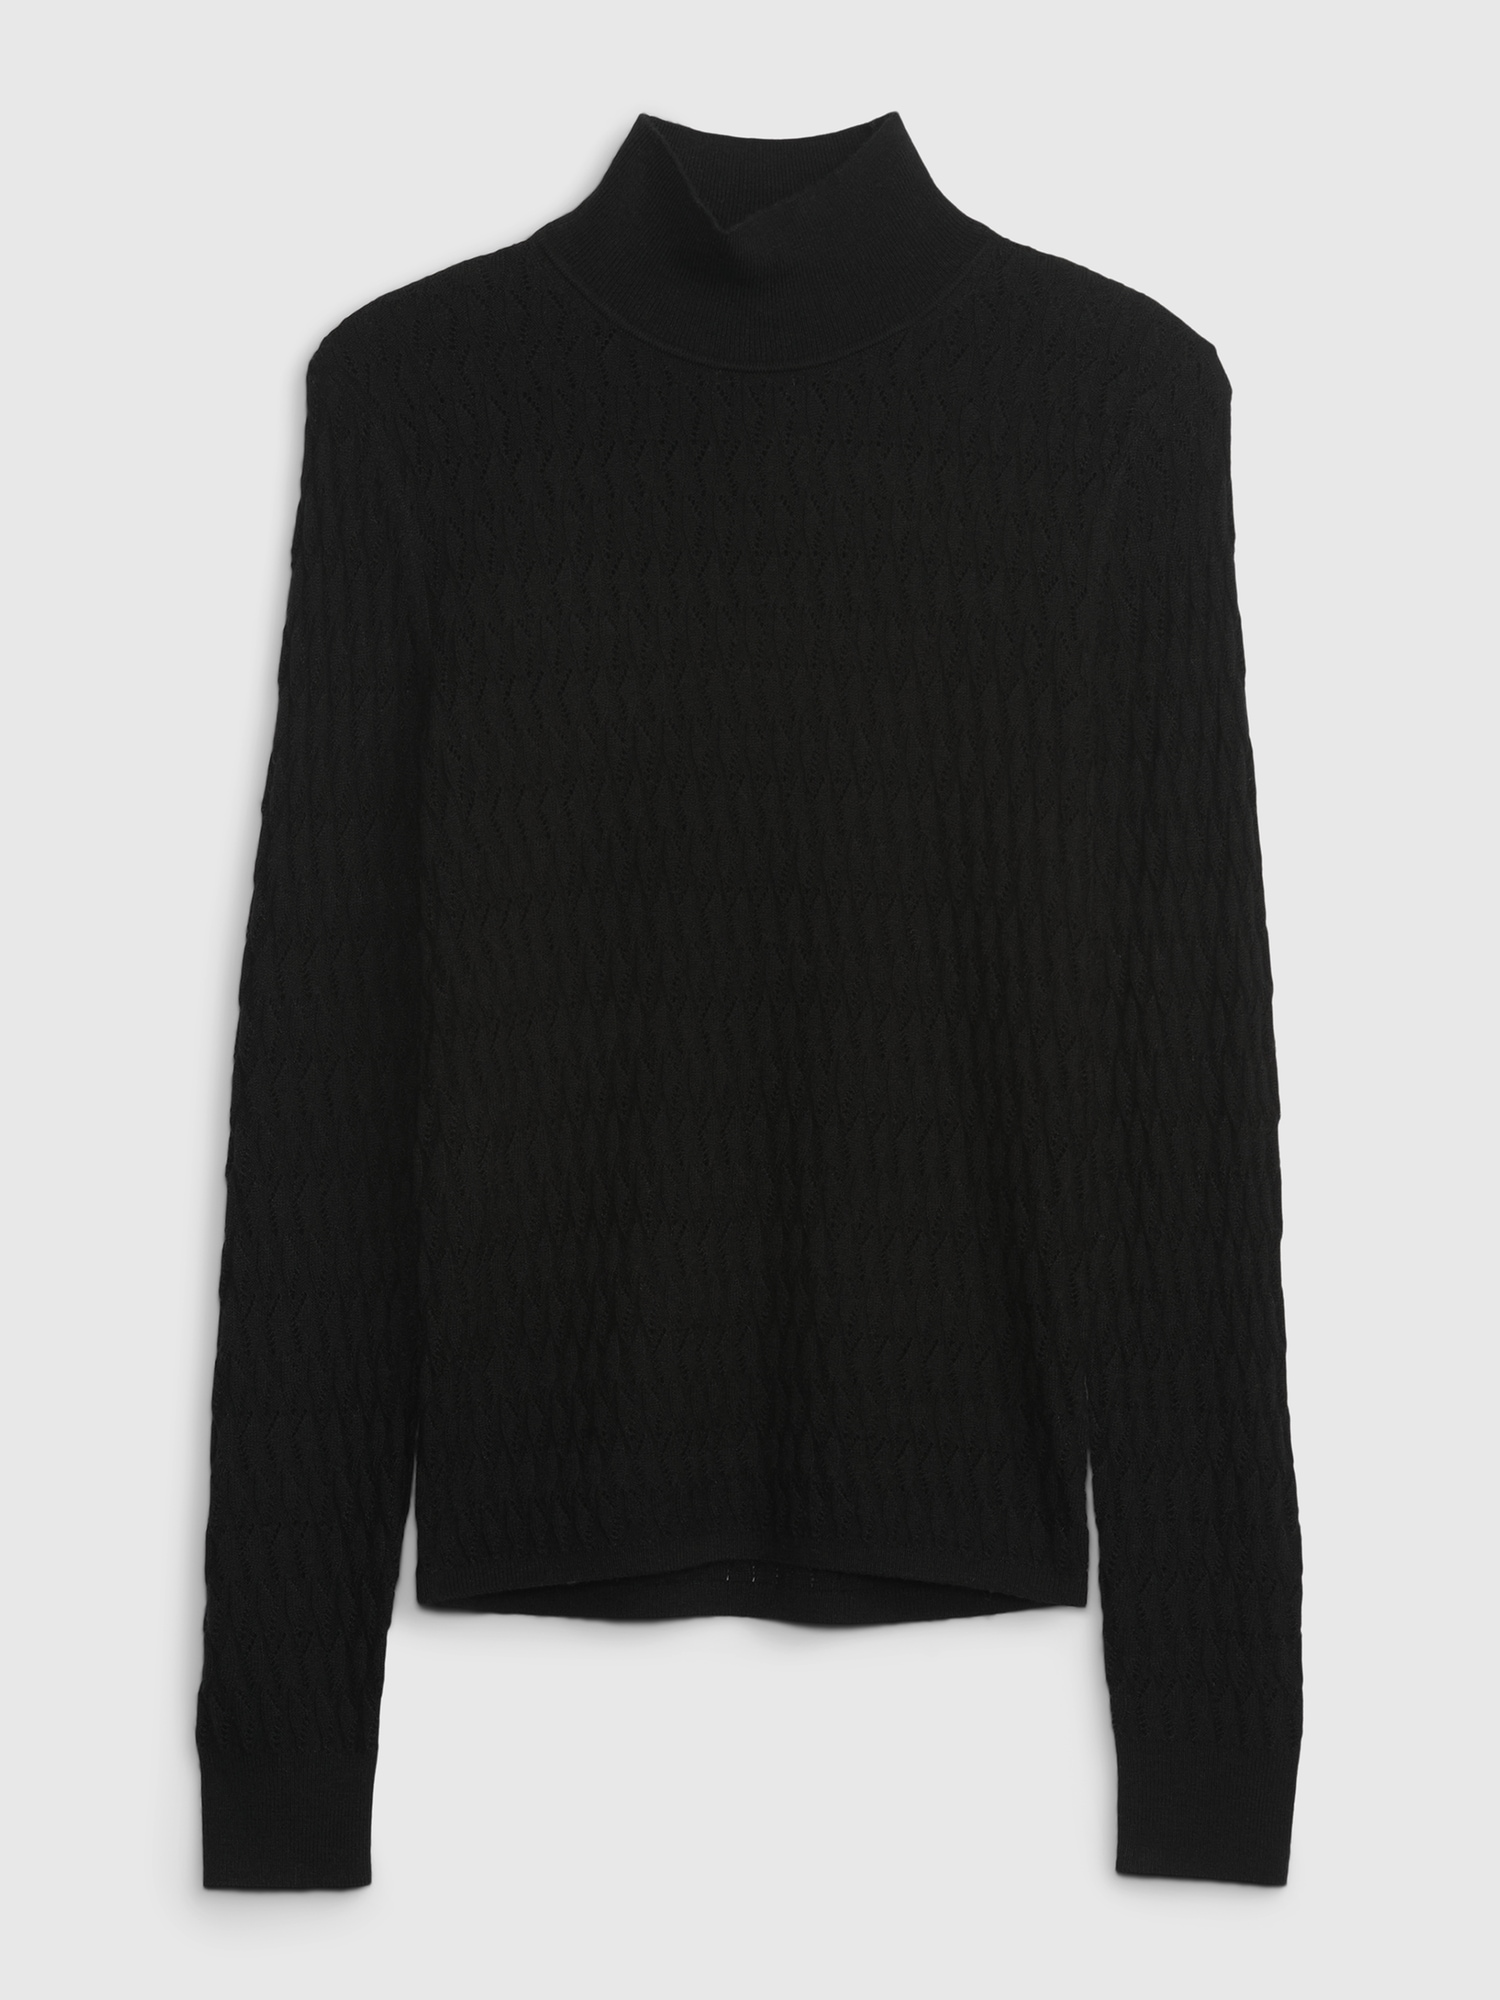 Pointelle Turtleneck Sweater | Gap